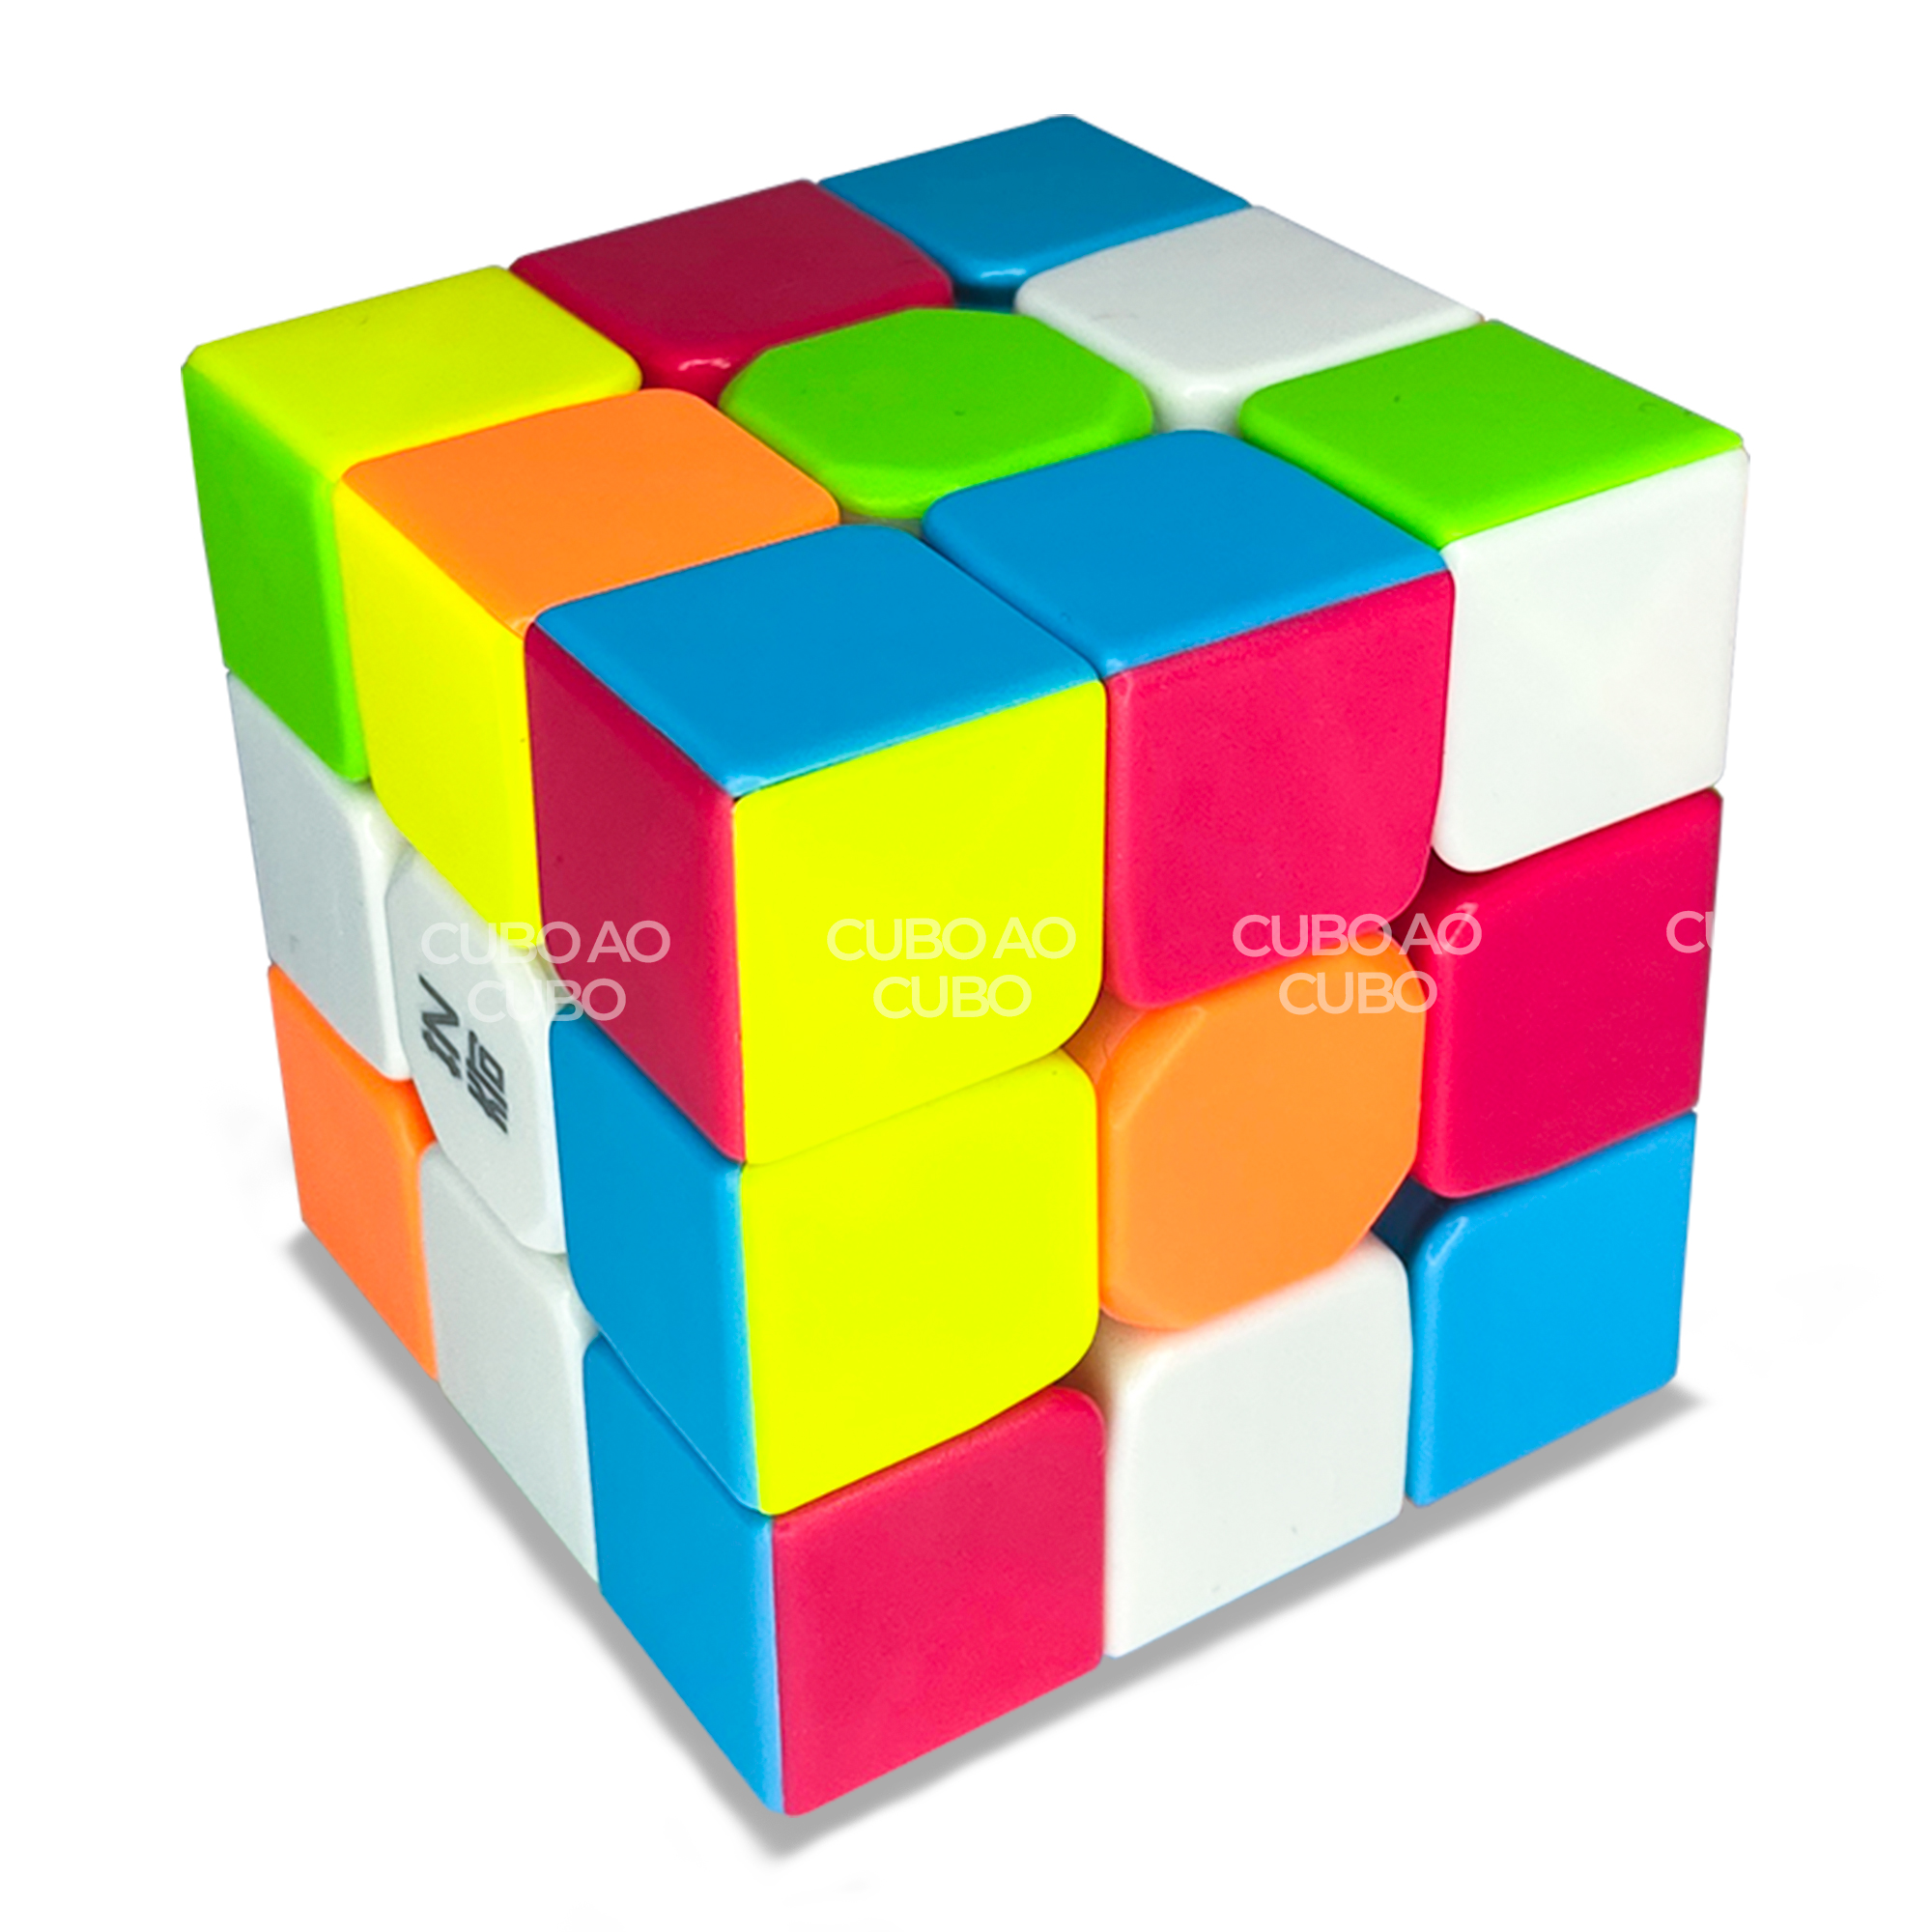 Cubo Mágico Profissional 3x3x3 qiyi Warrior W - original no Shoptime